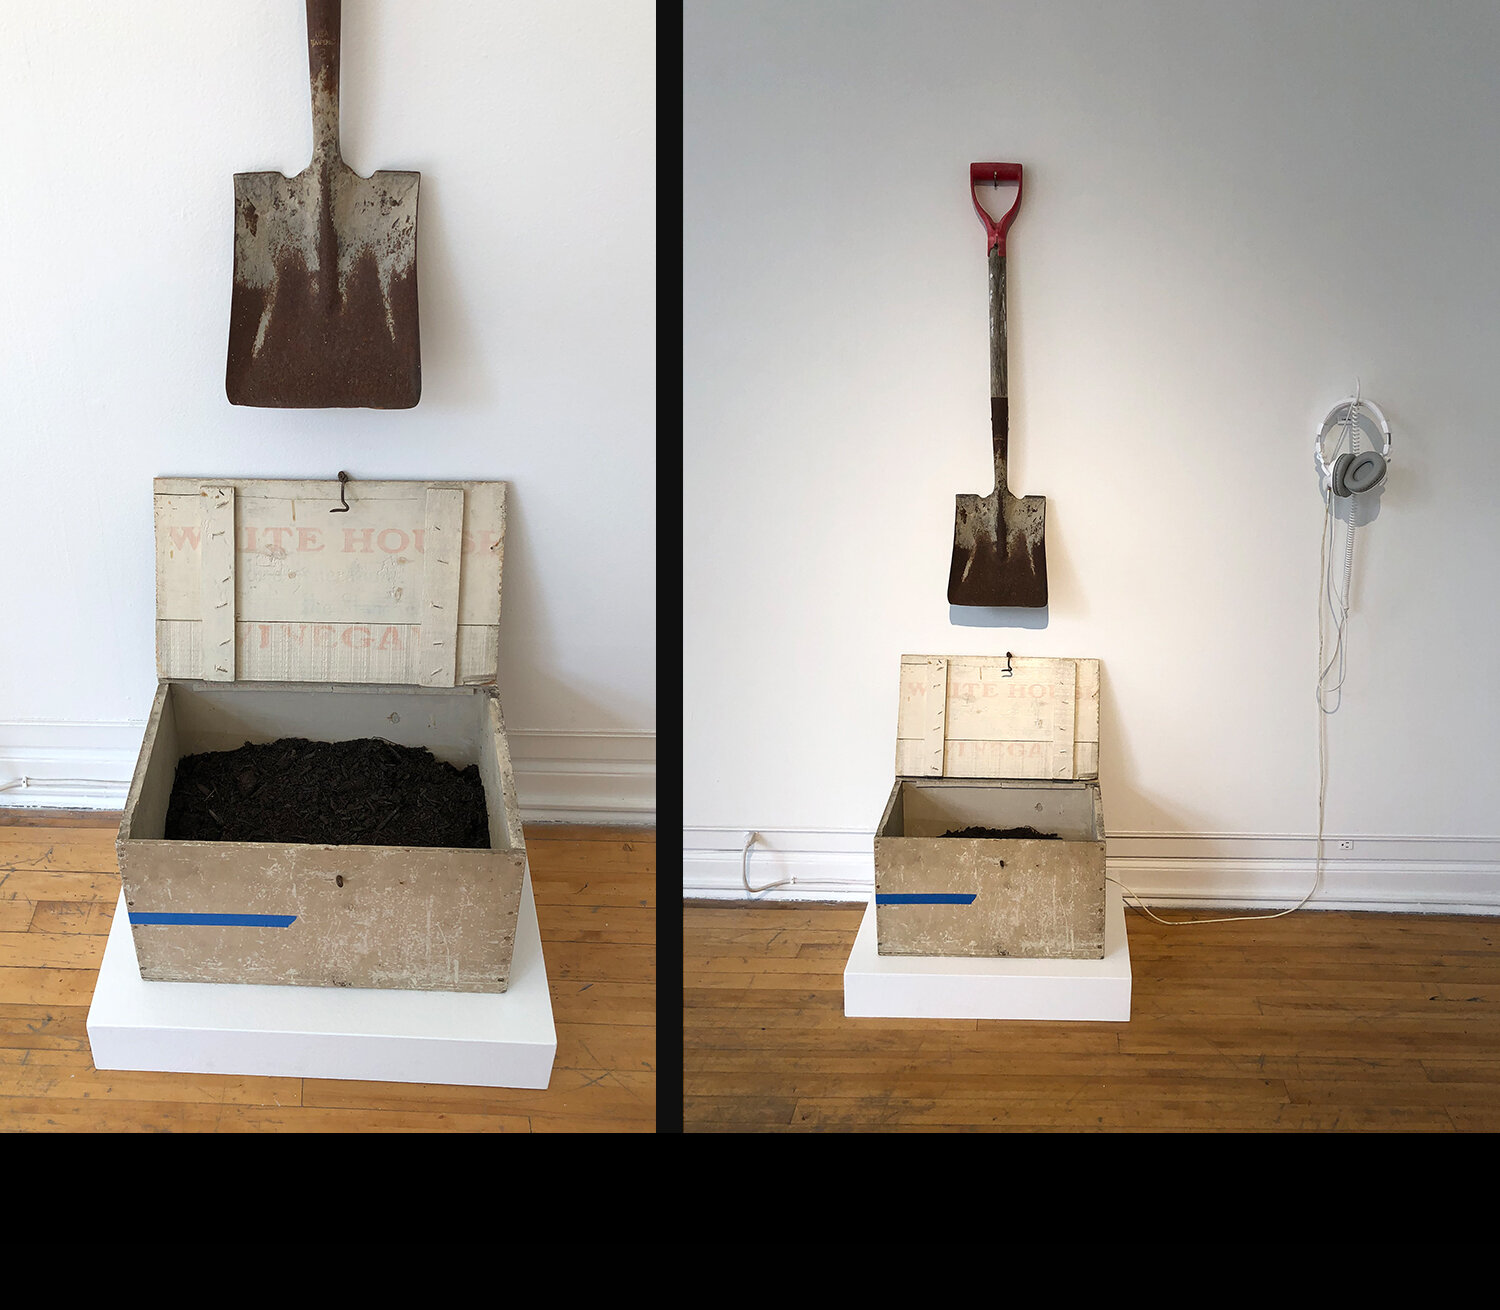   Ricardo iamuuri Robinson ,  Untitled Sound Art U.S.A ., 2019, shovel, wooden box with American soil, sound, (detail on left) 